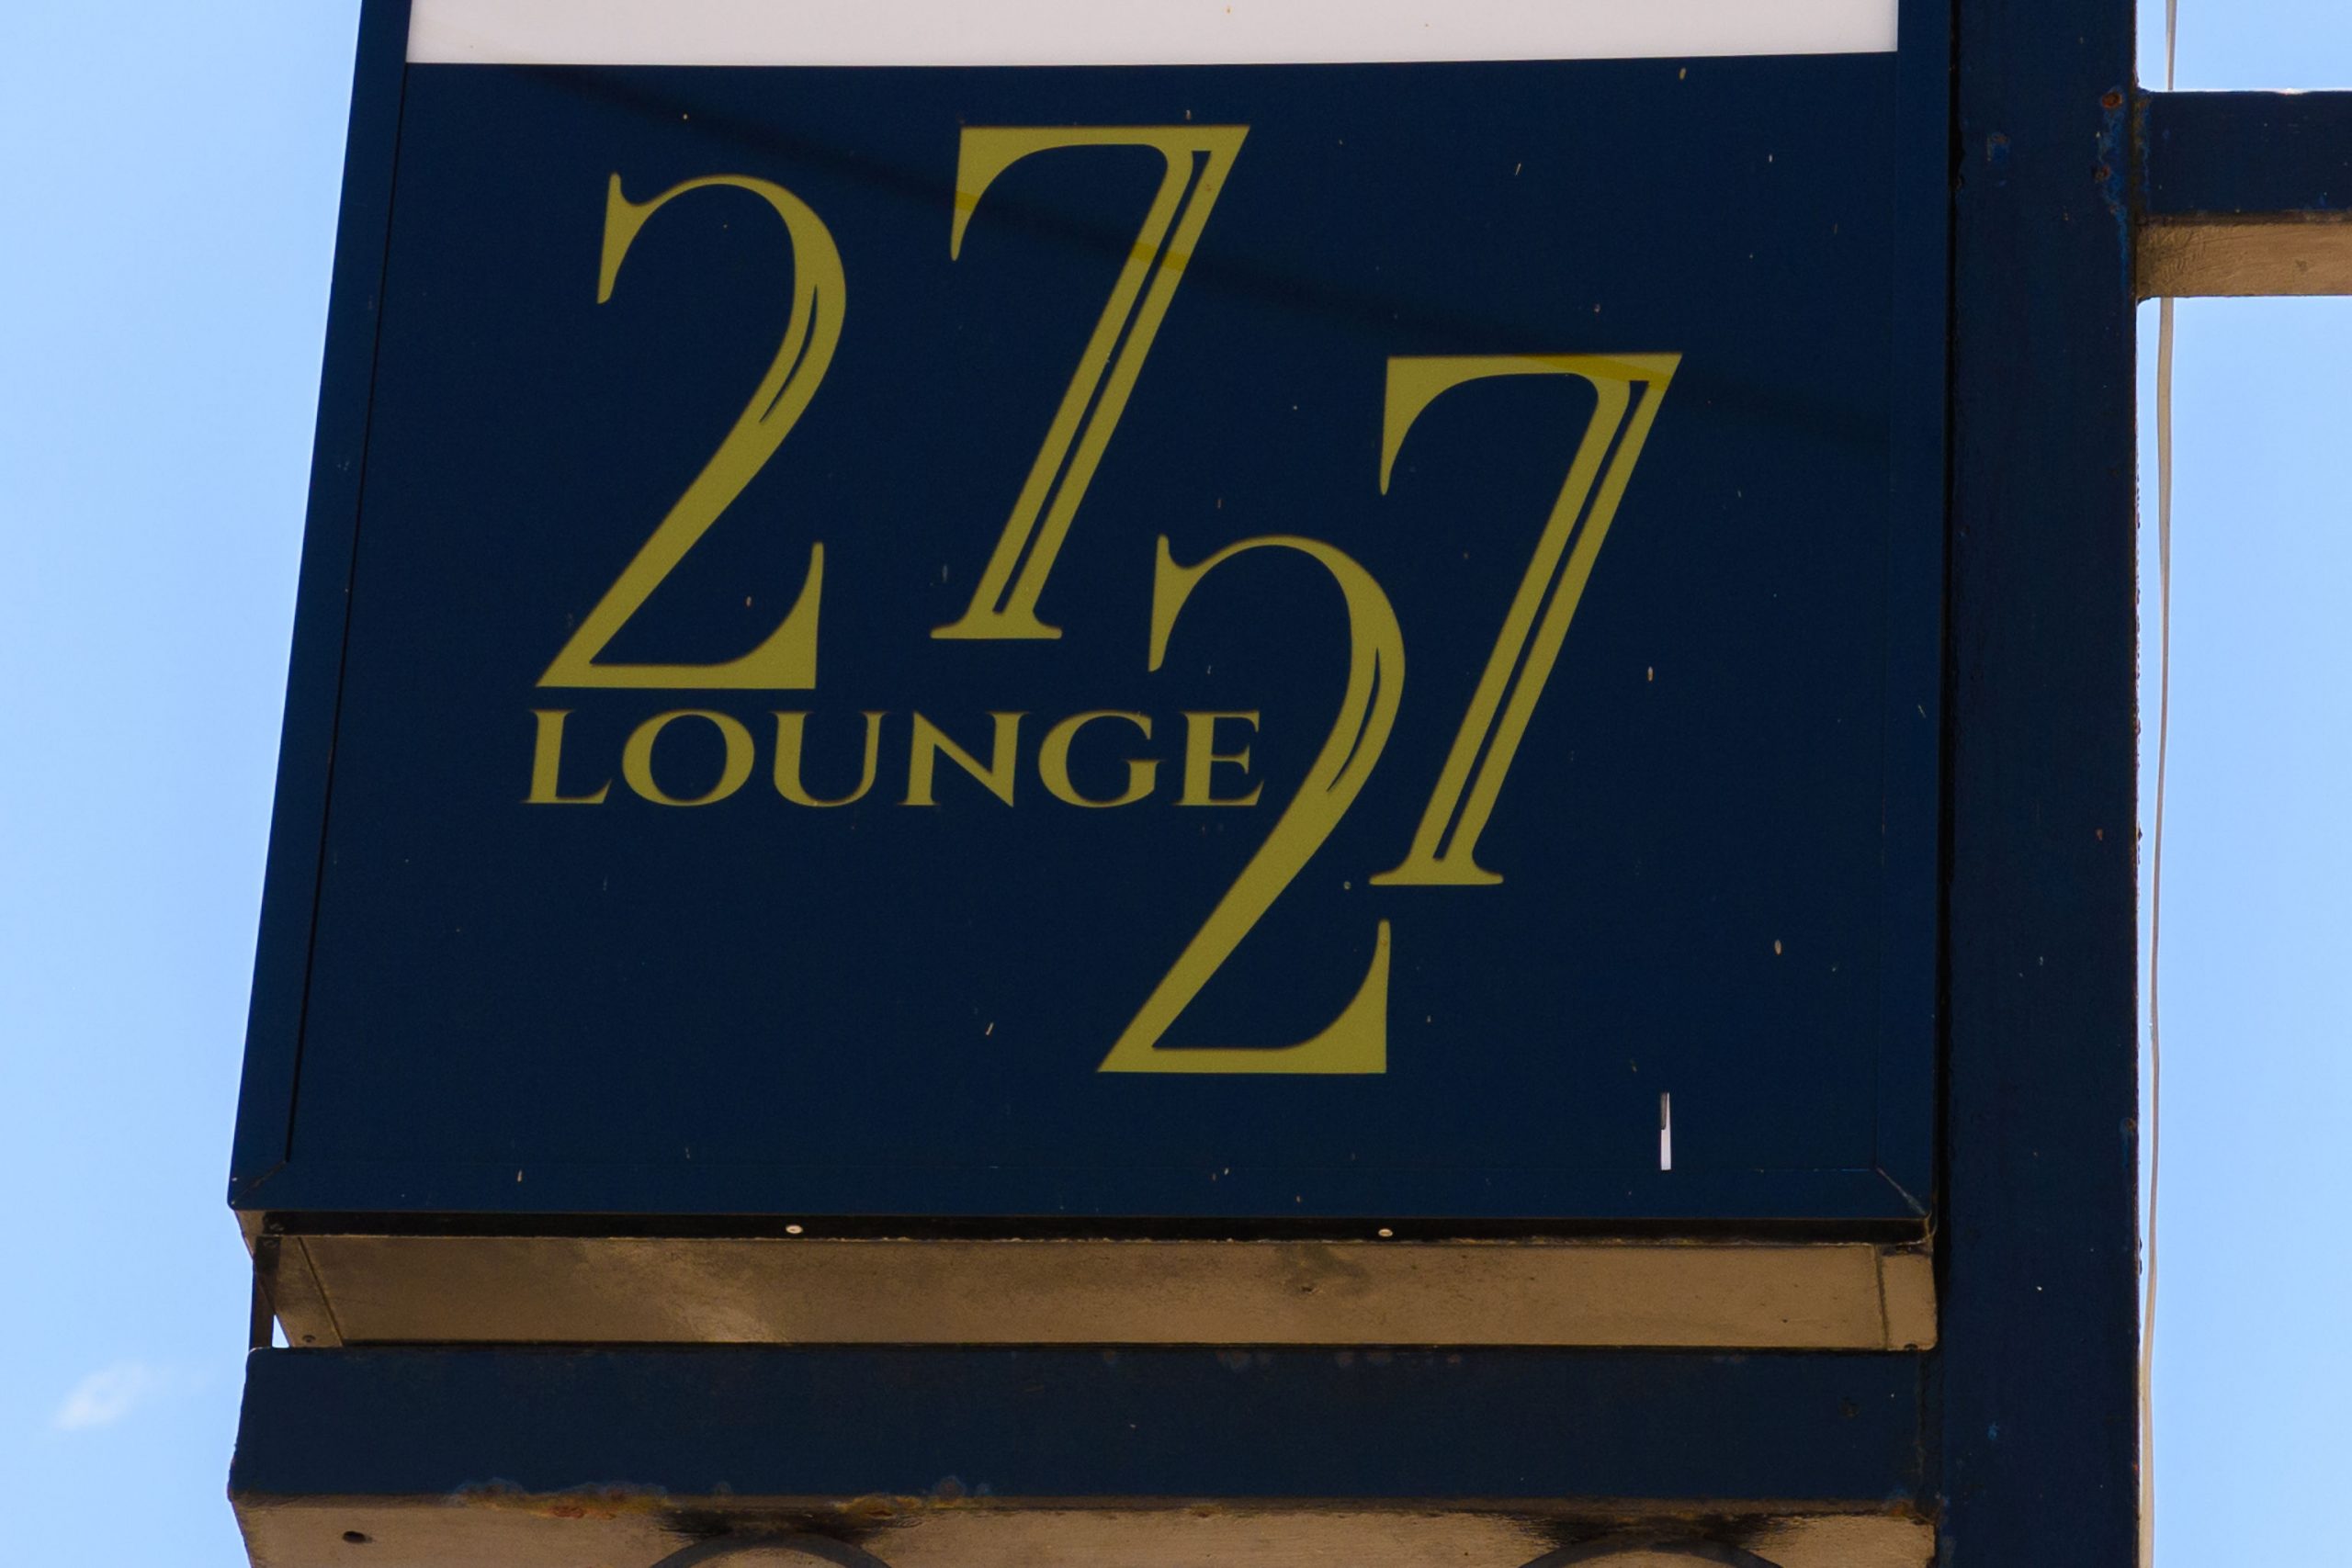 Lounge 27